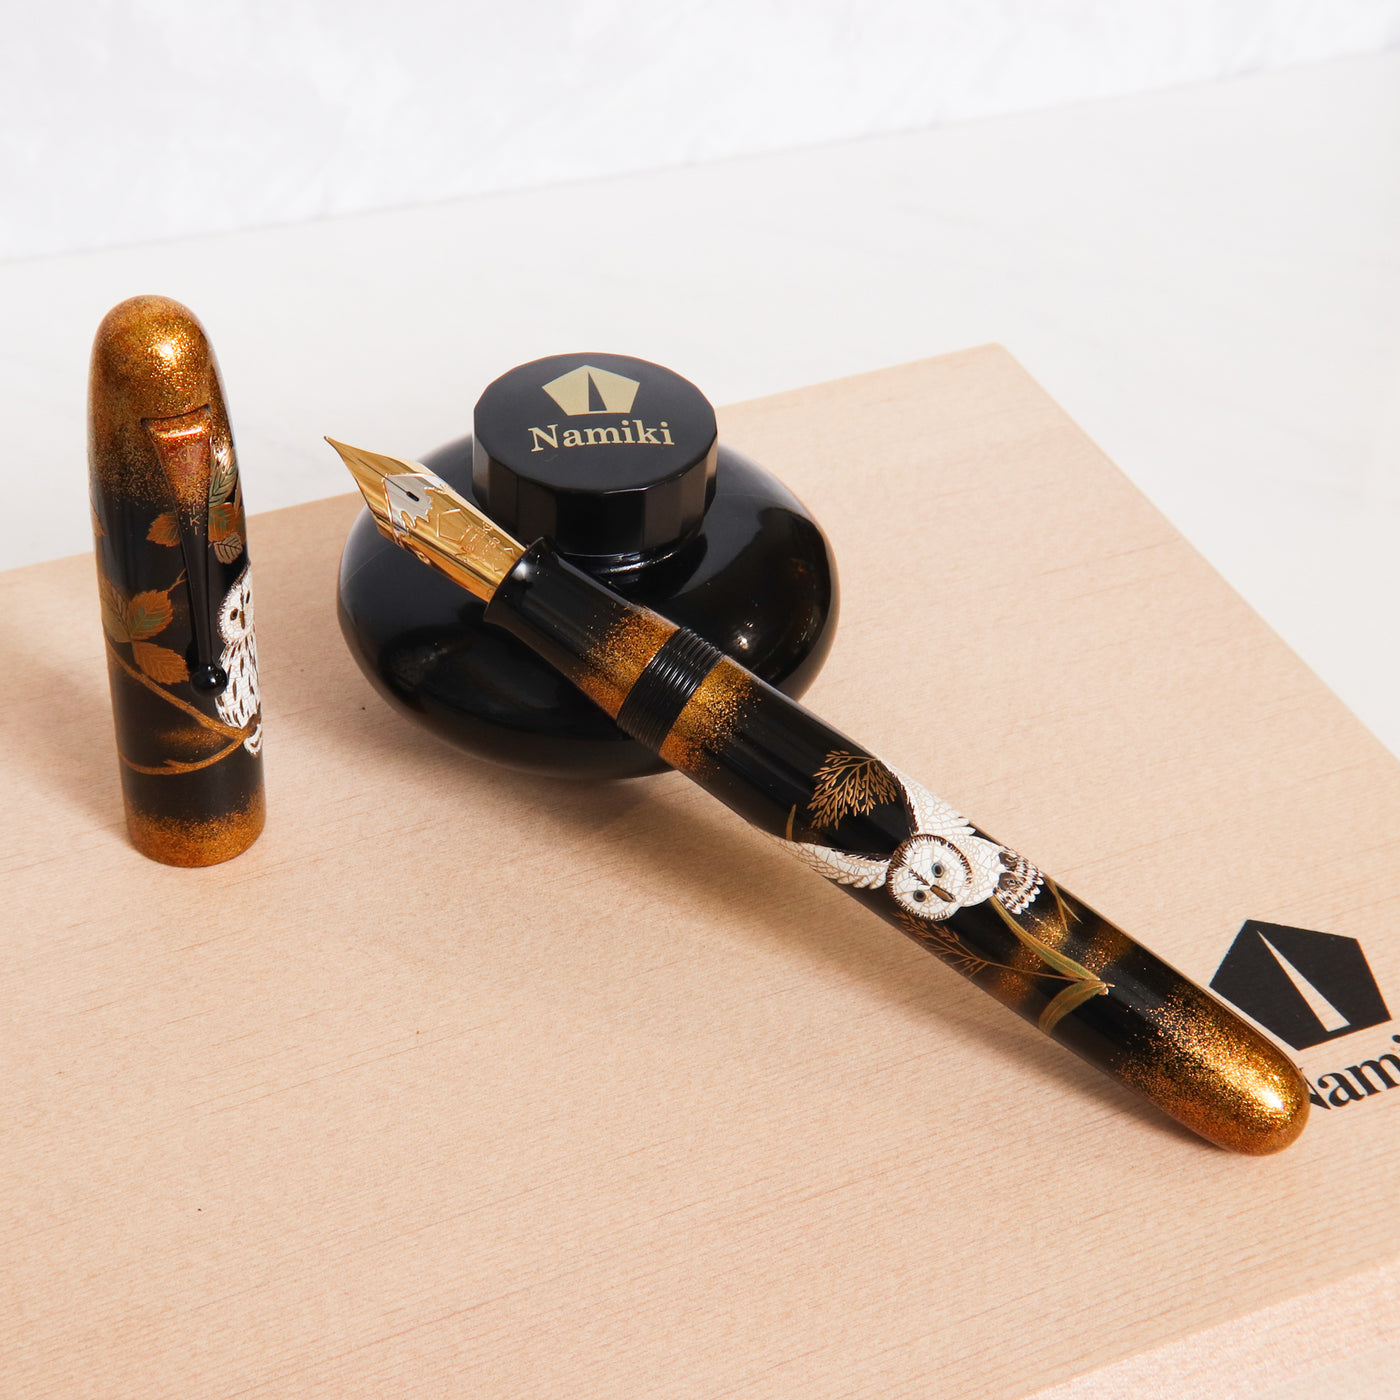 Namiki Emperor Owl Maki-e Fountain Pen With Bottle of Ink